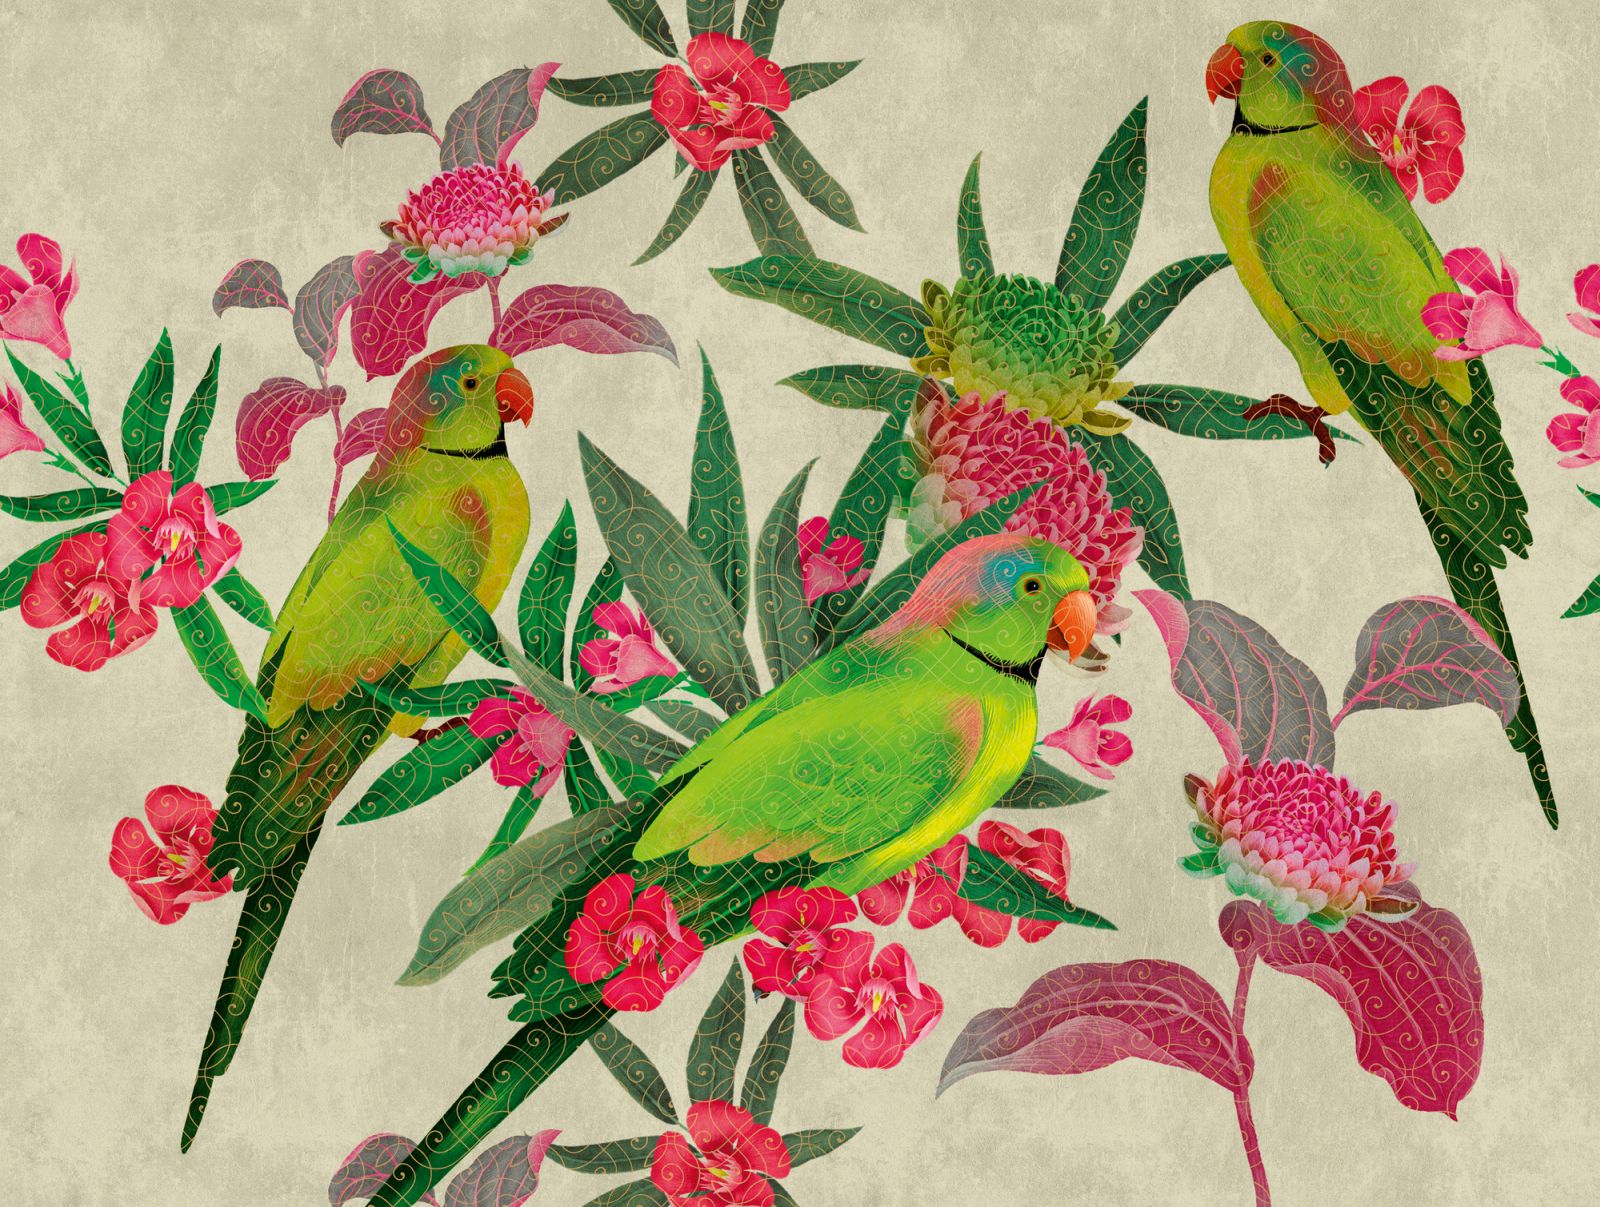 The Wall - Green Parrot  - Grün, Rosa, Rot